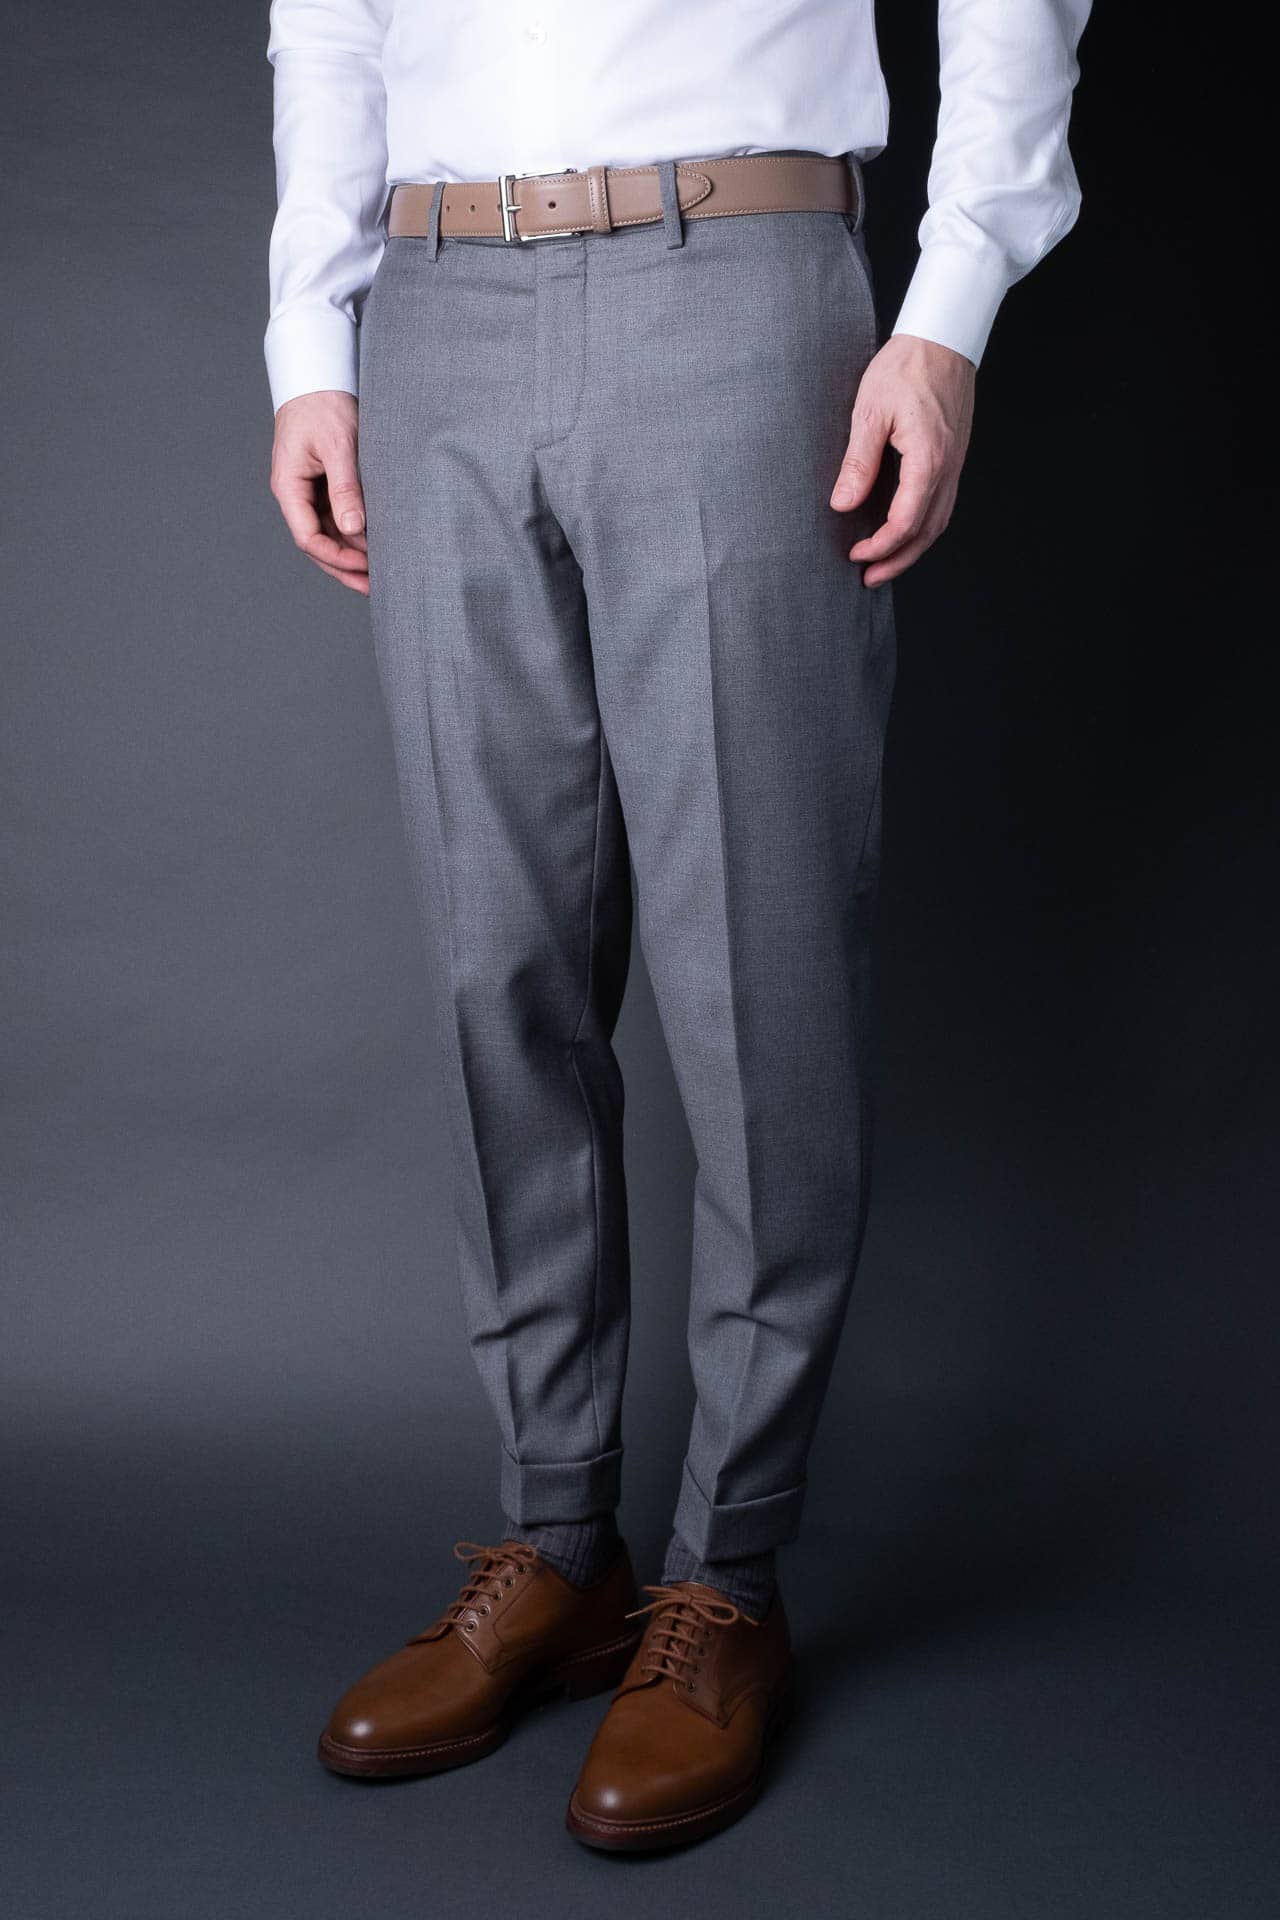 Buy Full Length Textured Formal Trousers with Pocket Detail and Belt Loops  | Splash KSA